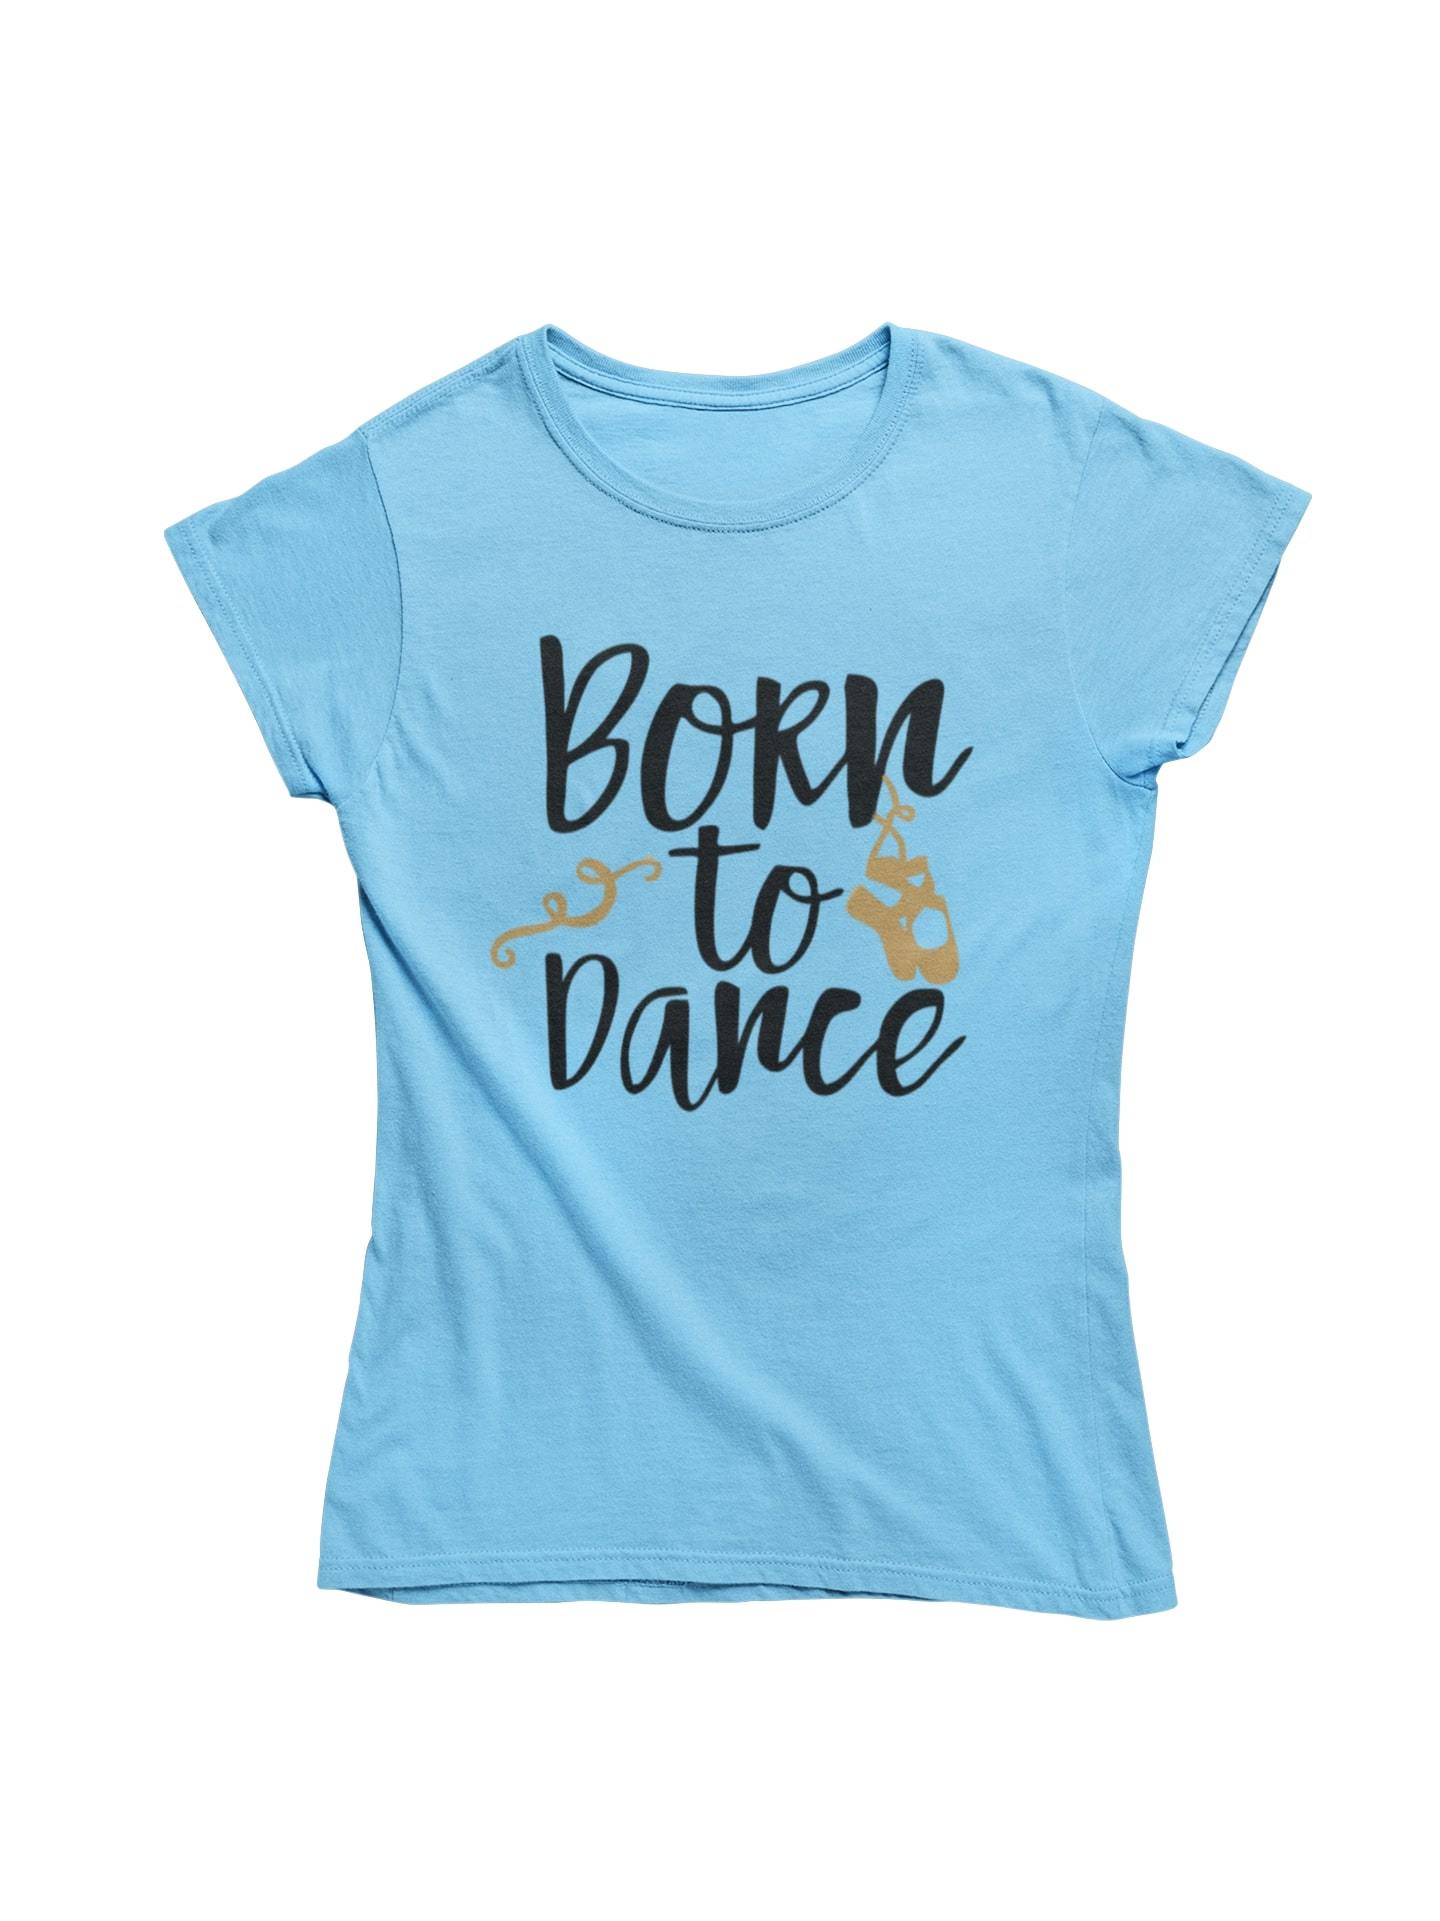 thelegalgang,Born to Dance Graphic T shirt for Women,WOMEN.